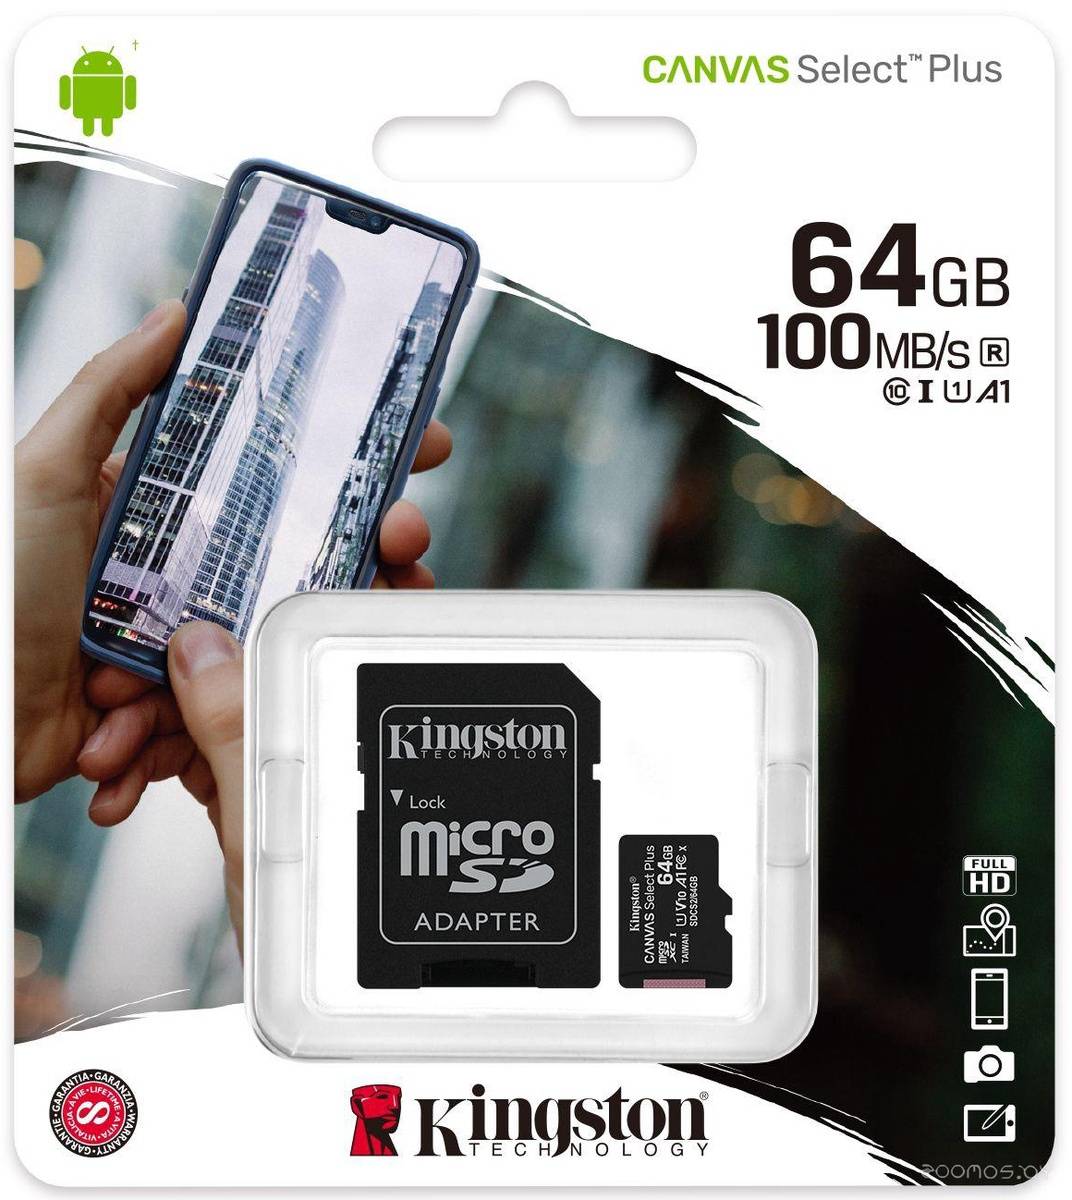   Kingston SDCS2/64GB     